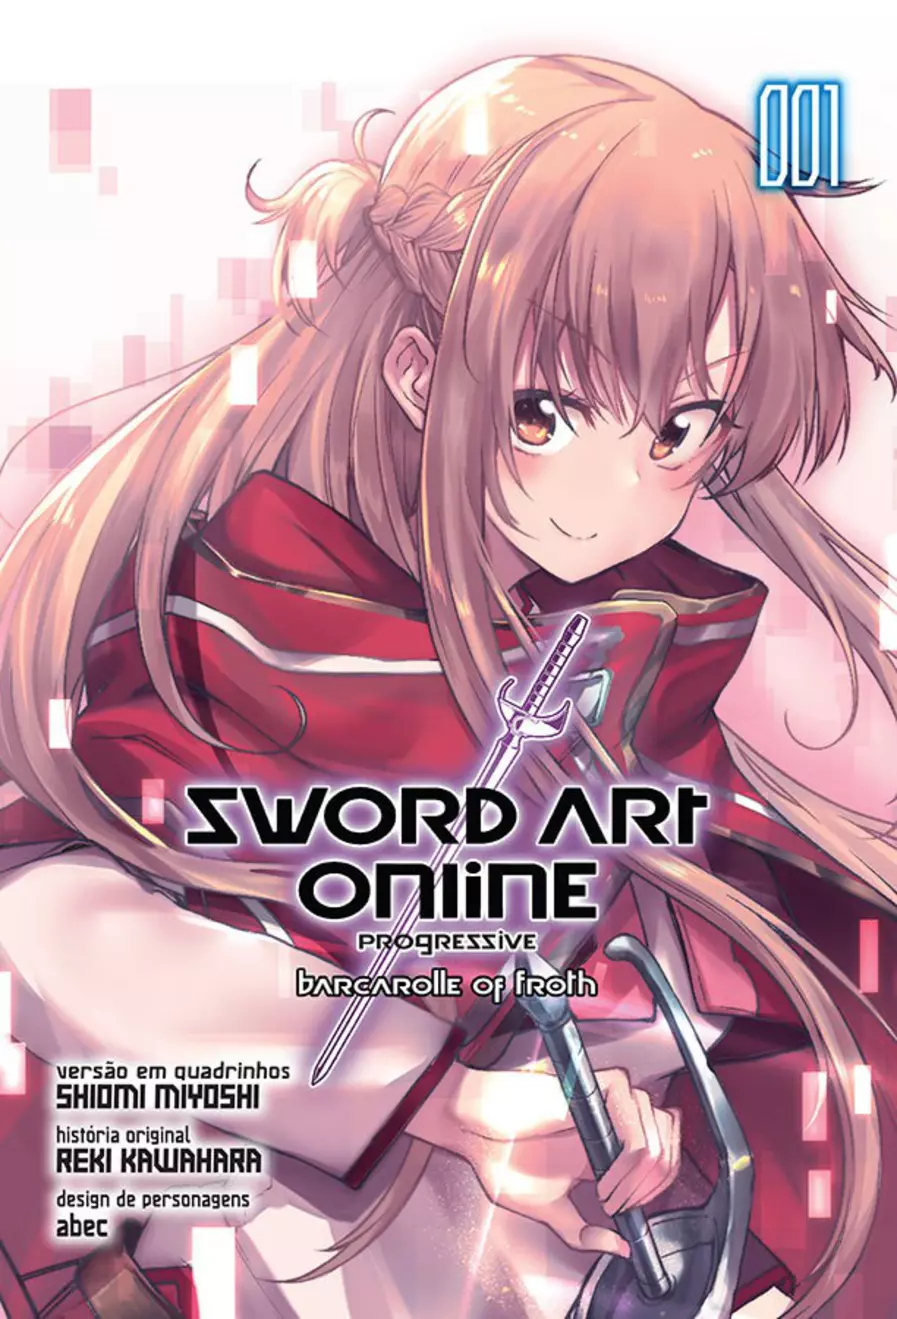 Sword Art Online Progressive – Barcarole of Froth #1 – COMIC BOOM!